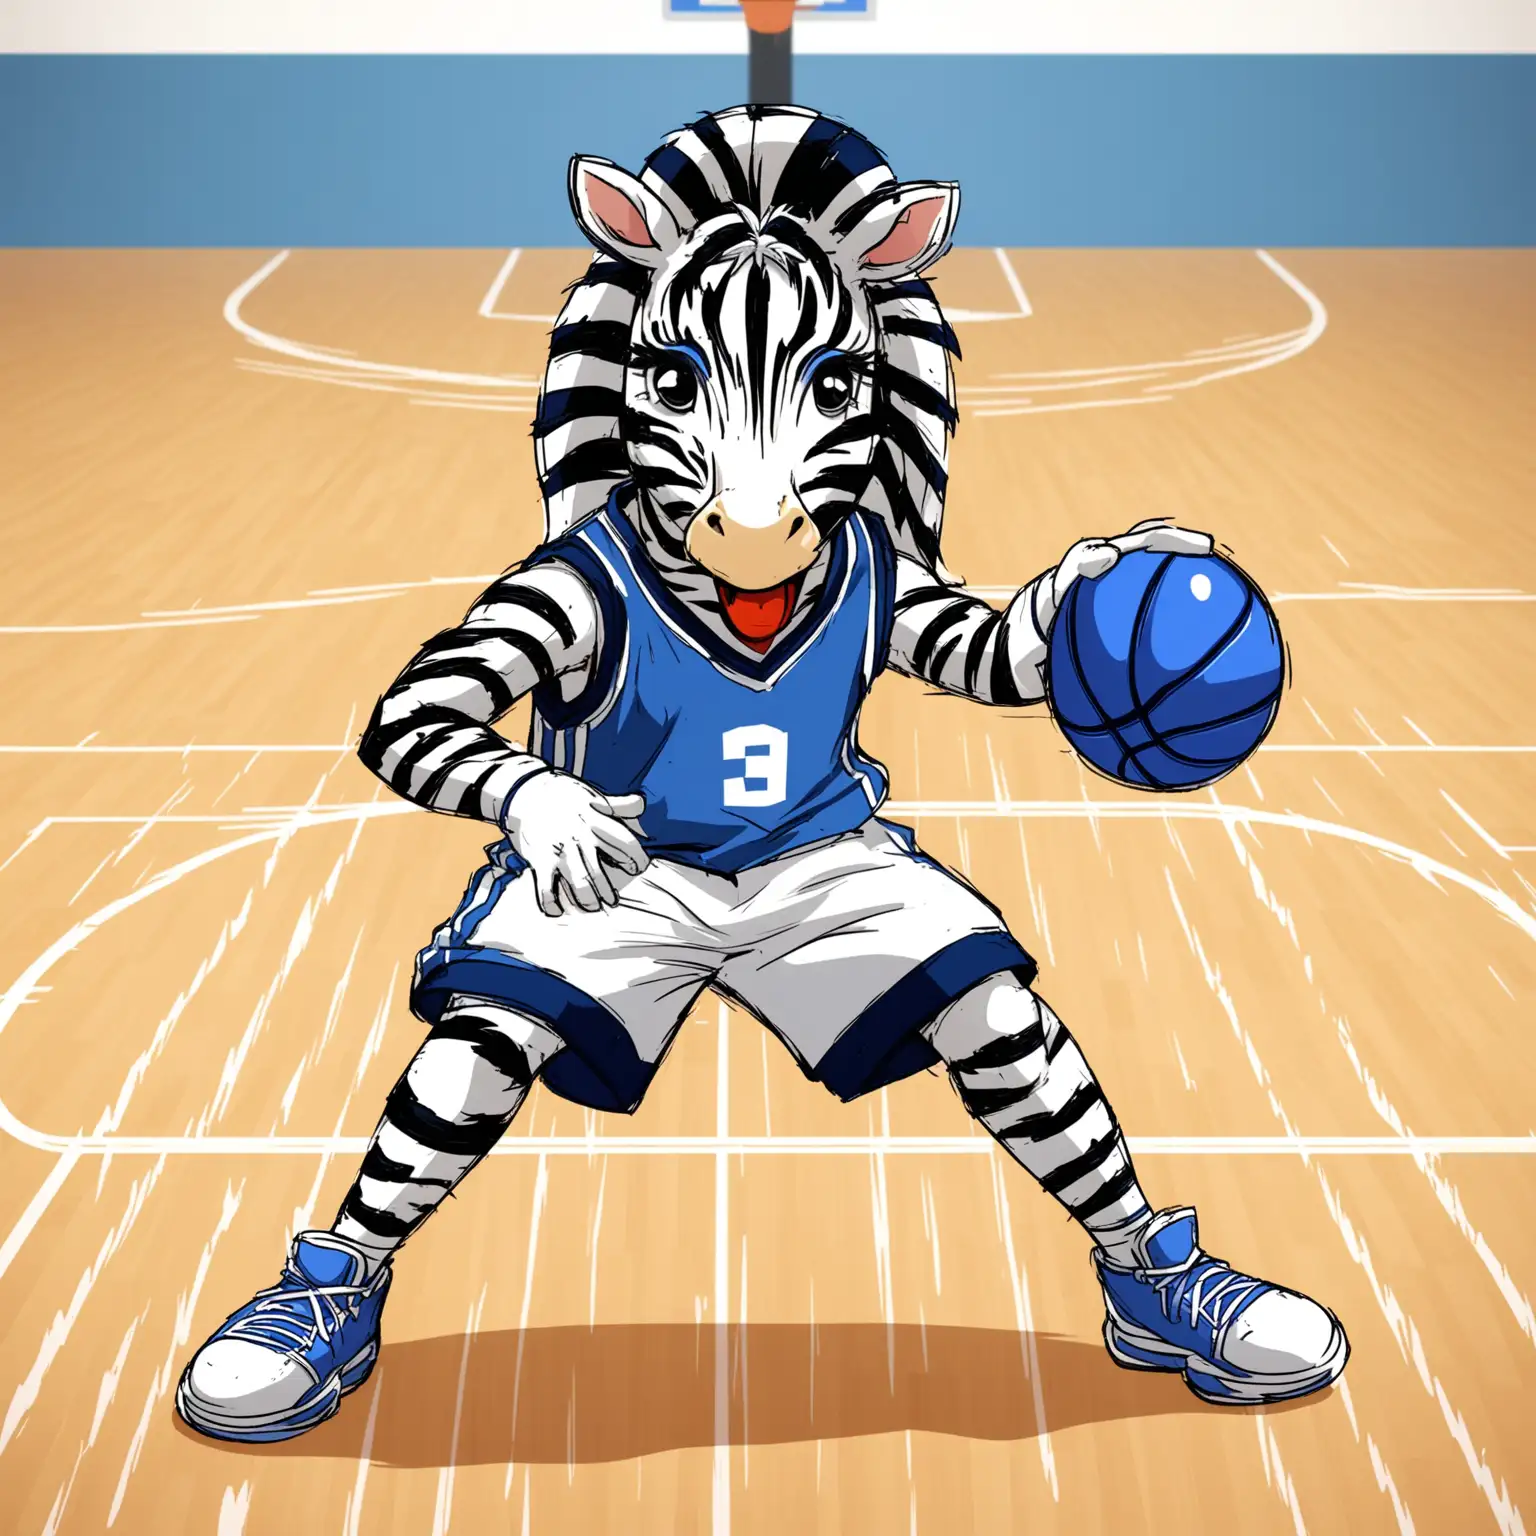 Create anime zebra type cartoon character playing basketball on basketball court, wearing white, blue, and navy blue basketball uniform